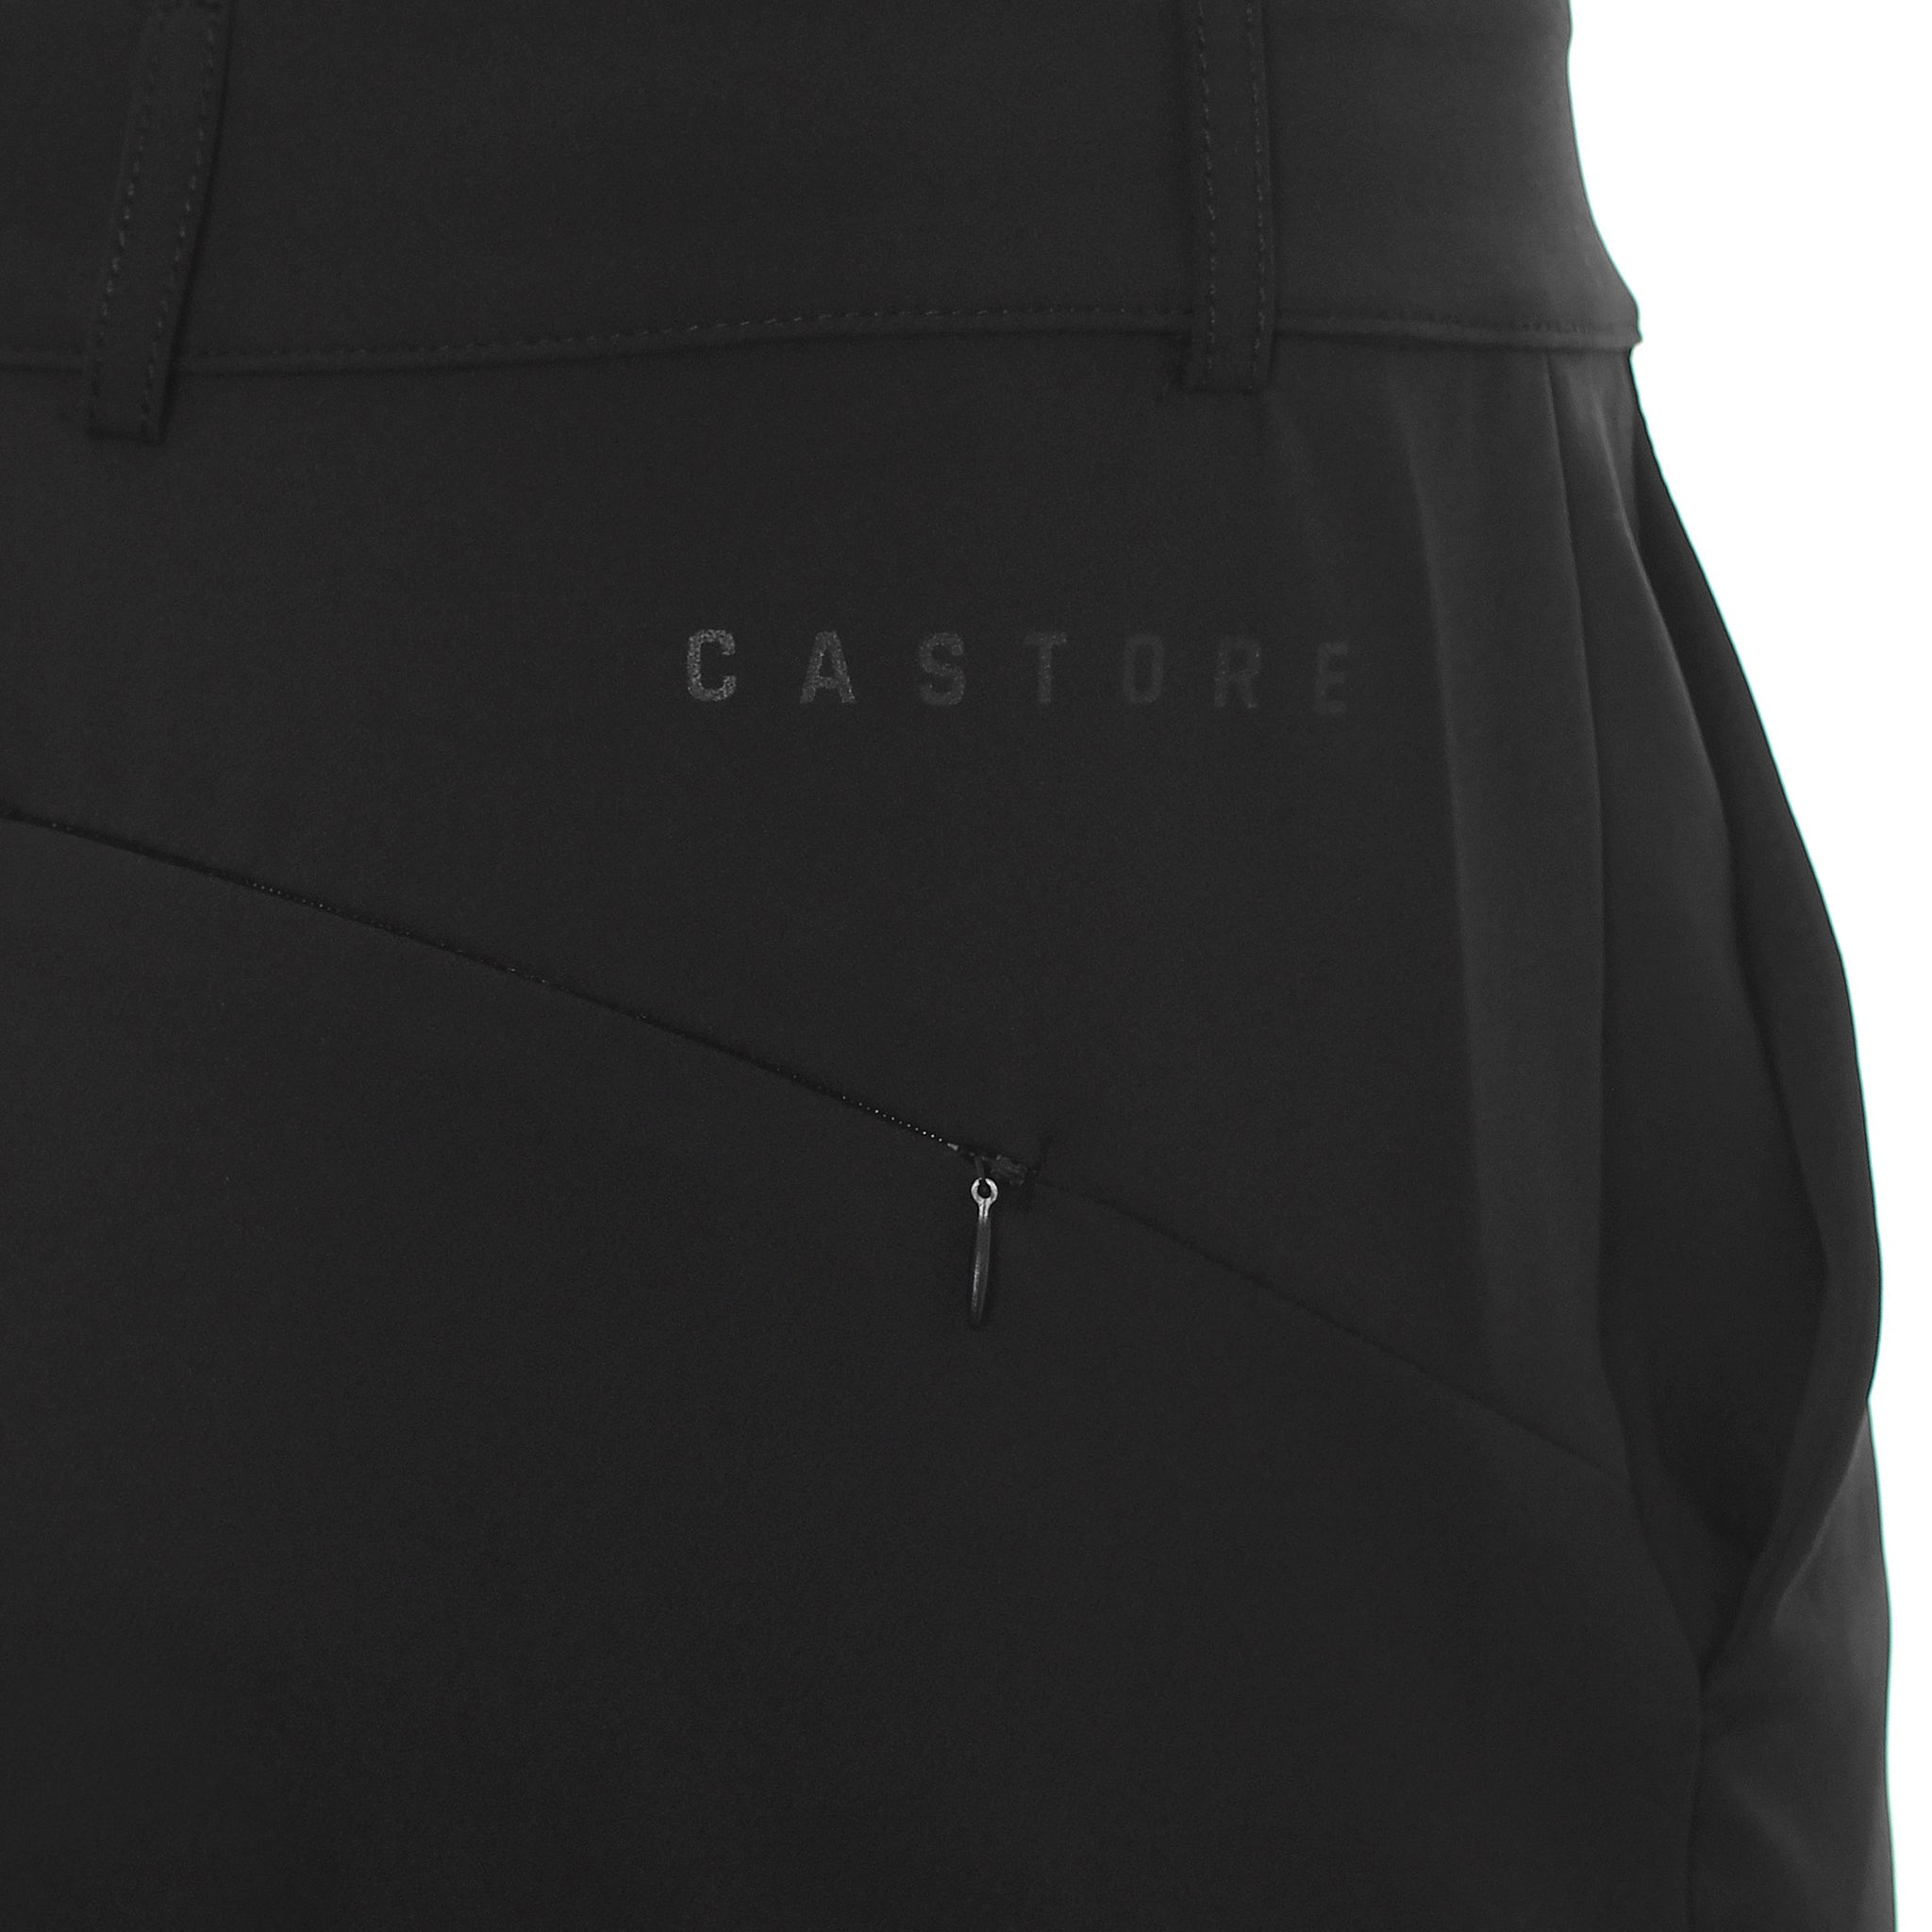 Castore Chino Golf Trousers